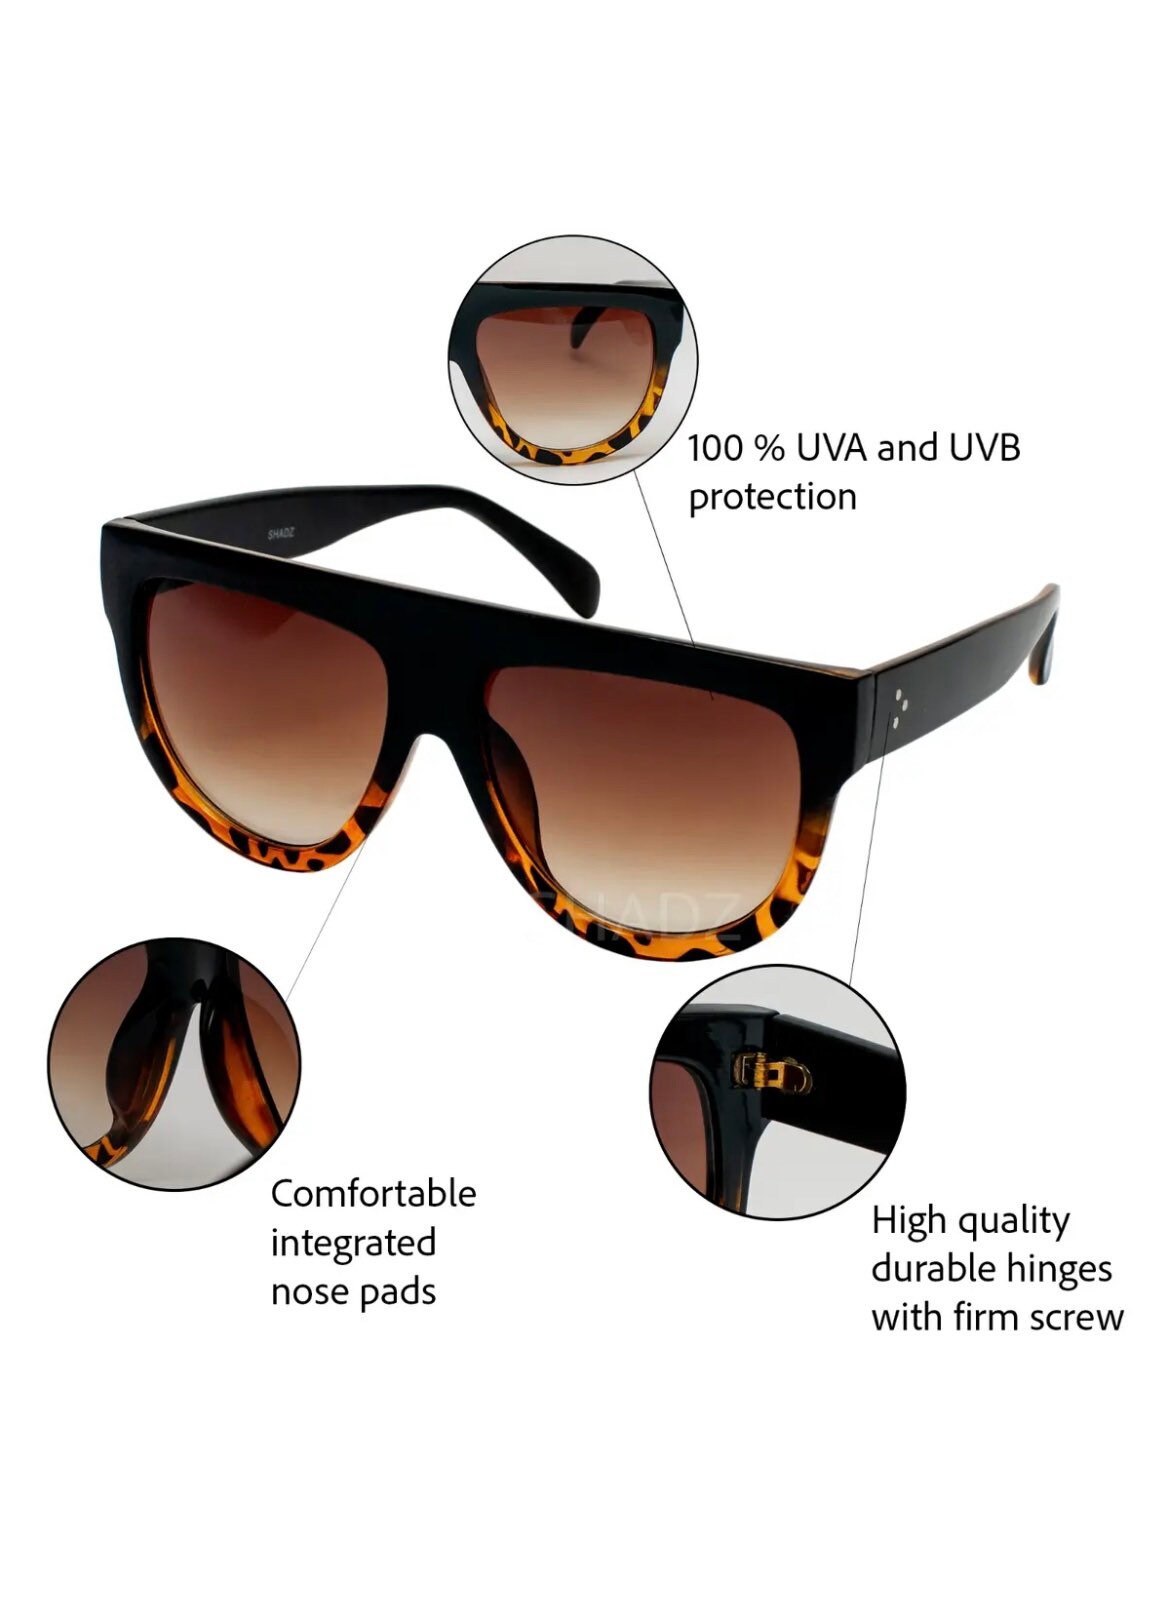 Sunglasses Thin SHADOW TEARDROP Oversized Flat Top Aviator -  Hong Kong